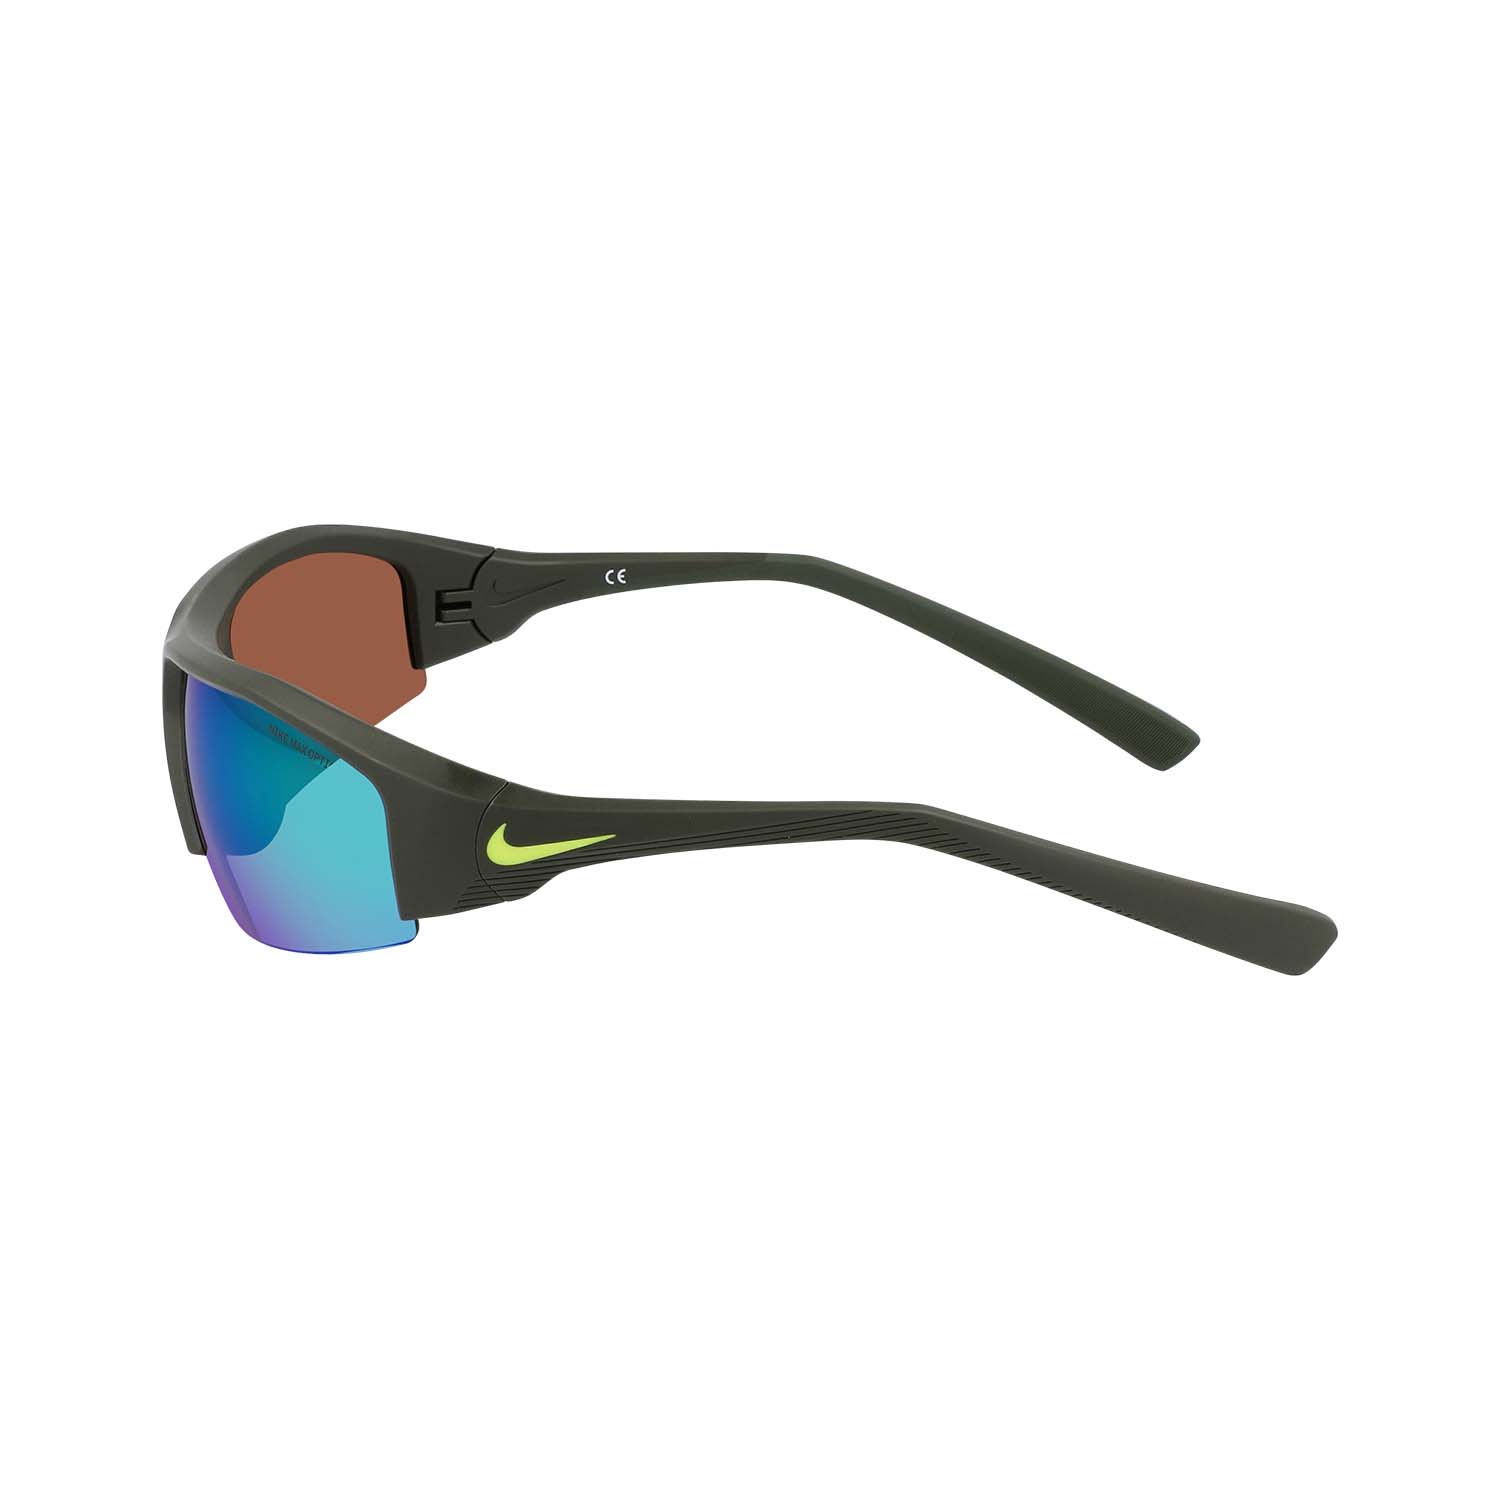 Nike Skylon Ace 22 Sunglasses - Matte Sequoia/Green Mirror